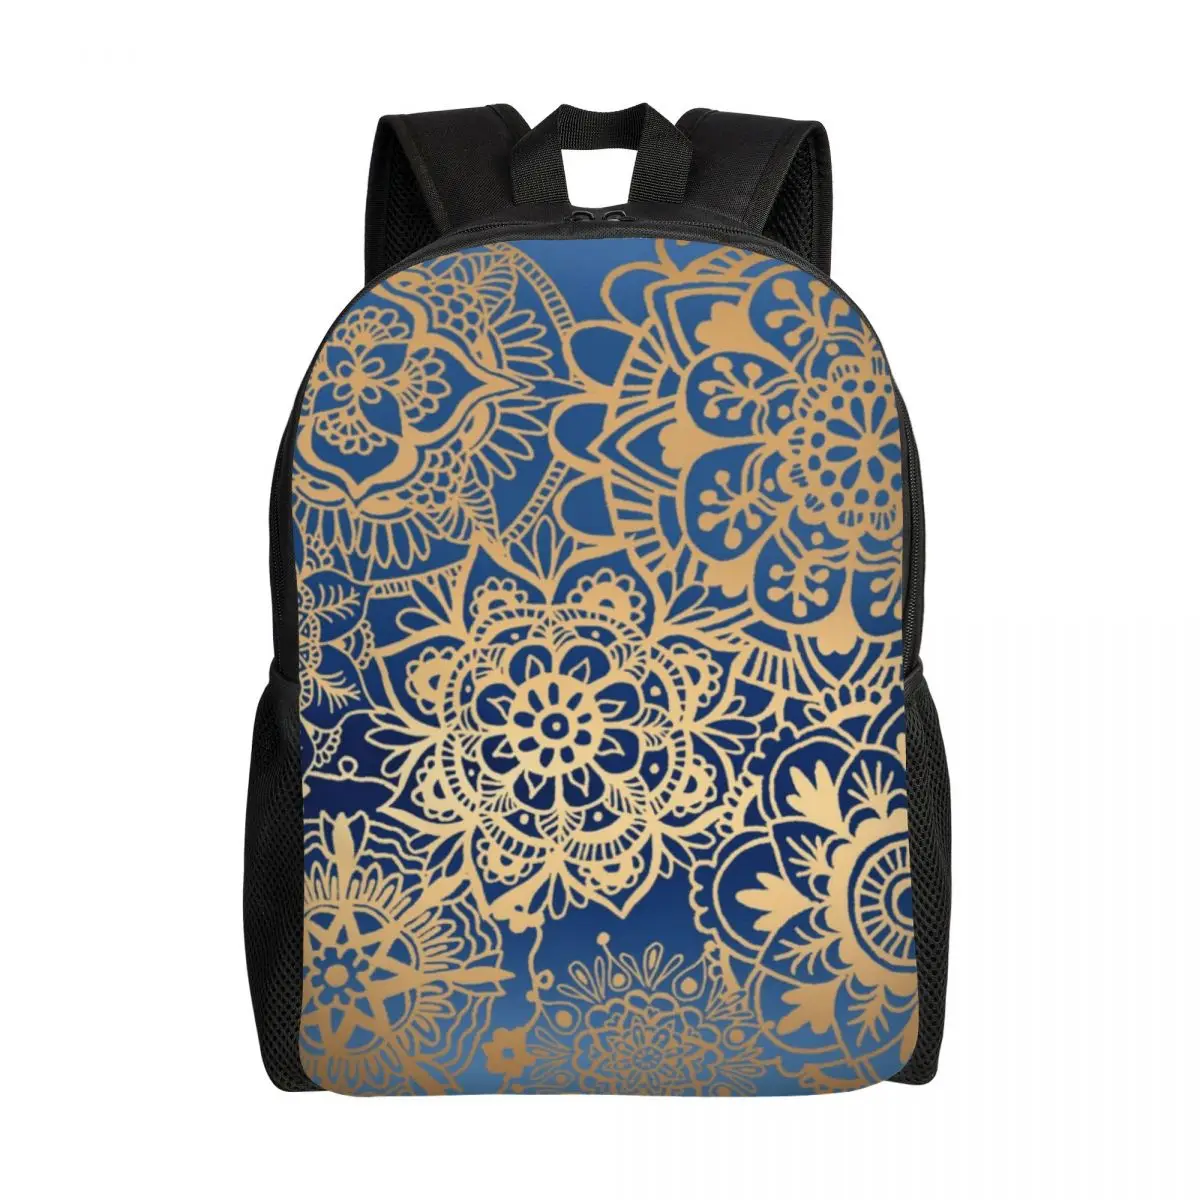 

Blue Gold Mandala Backpack for Women Men College School Students Bookbag Fits 15 Inch Laptop Buddhism Flower Bags